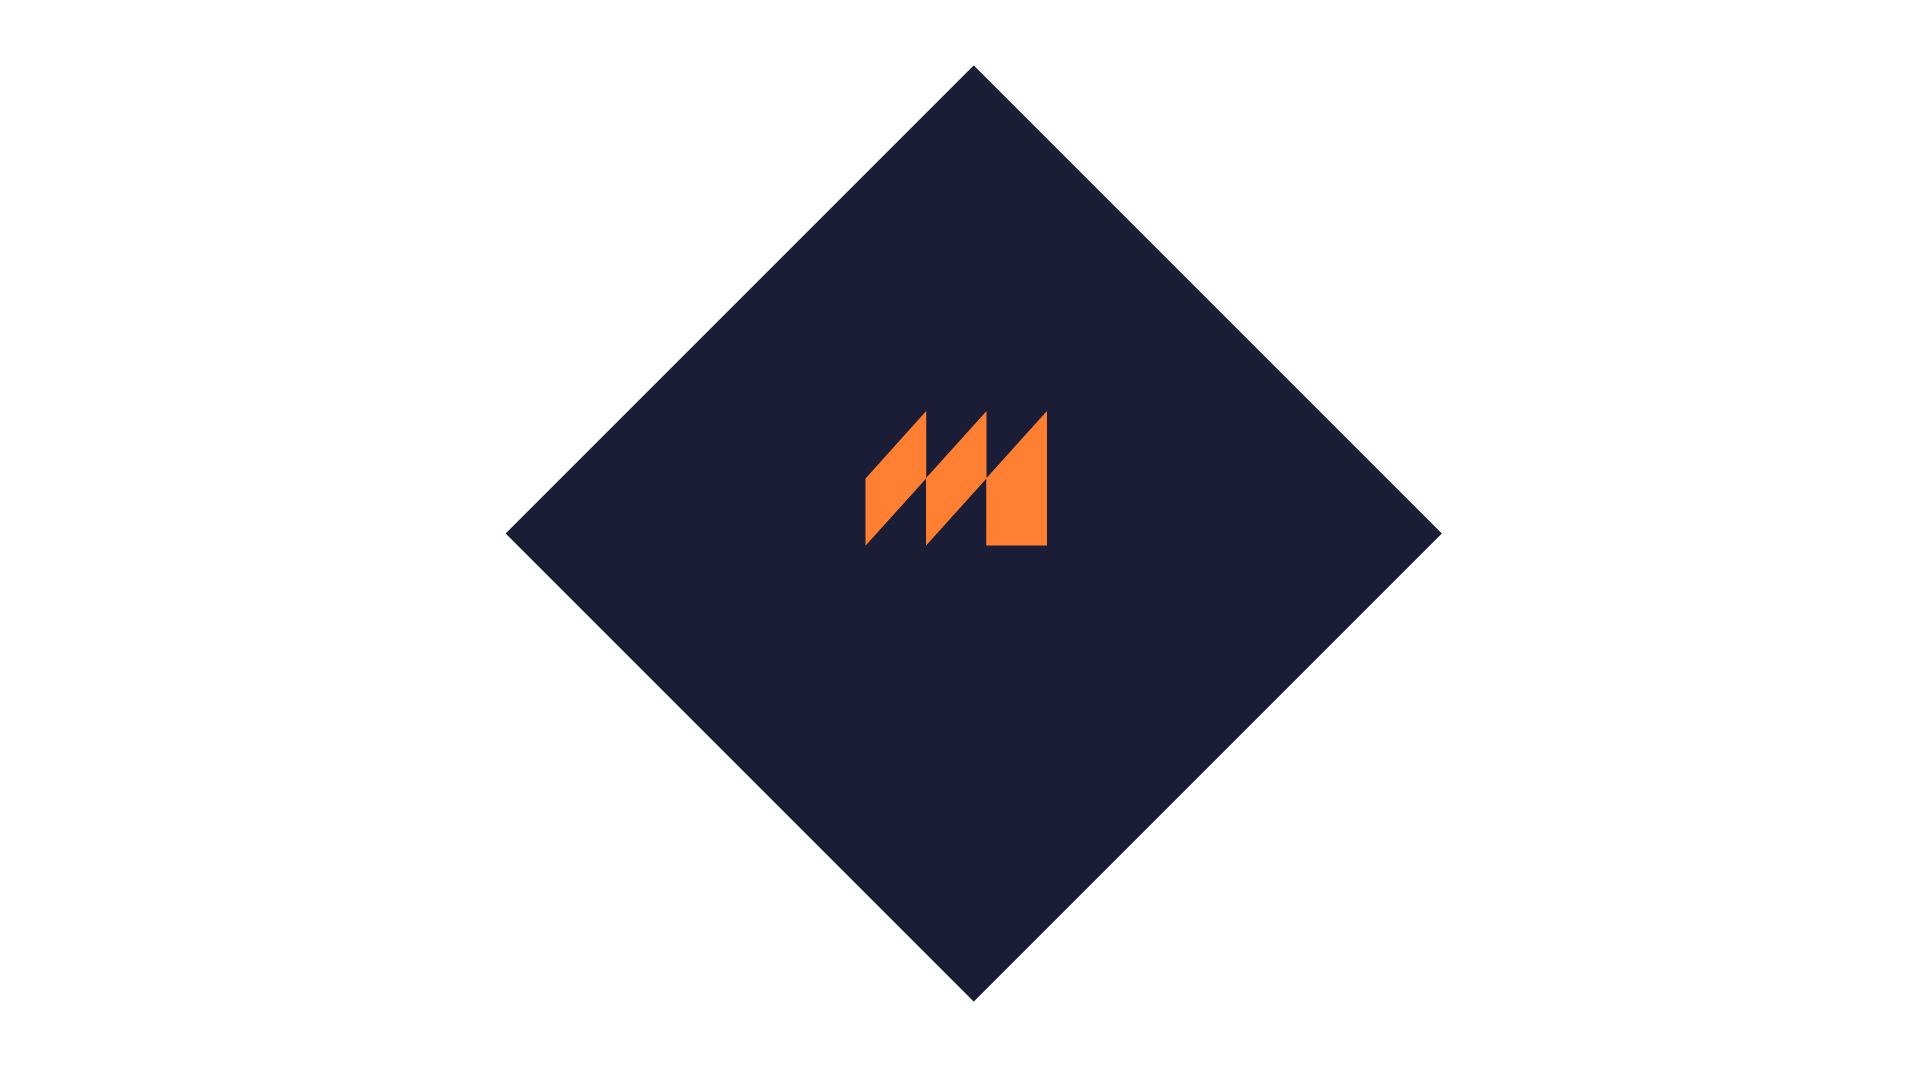 Mr mozart. Логотипы для ютуб канала Archi. Логотип для ютуб экономика. Логотип для ютуб канала история.